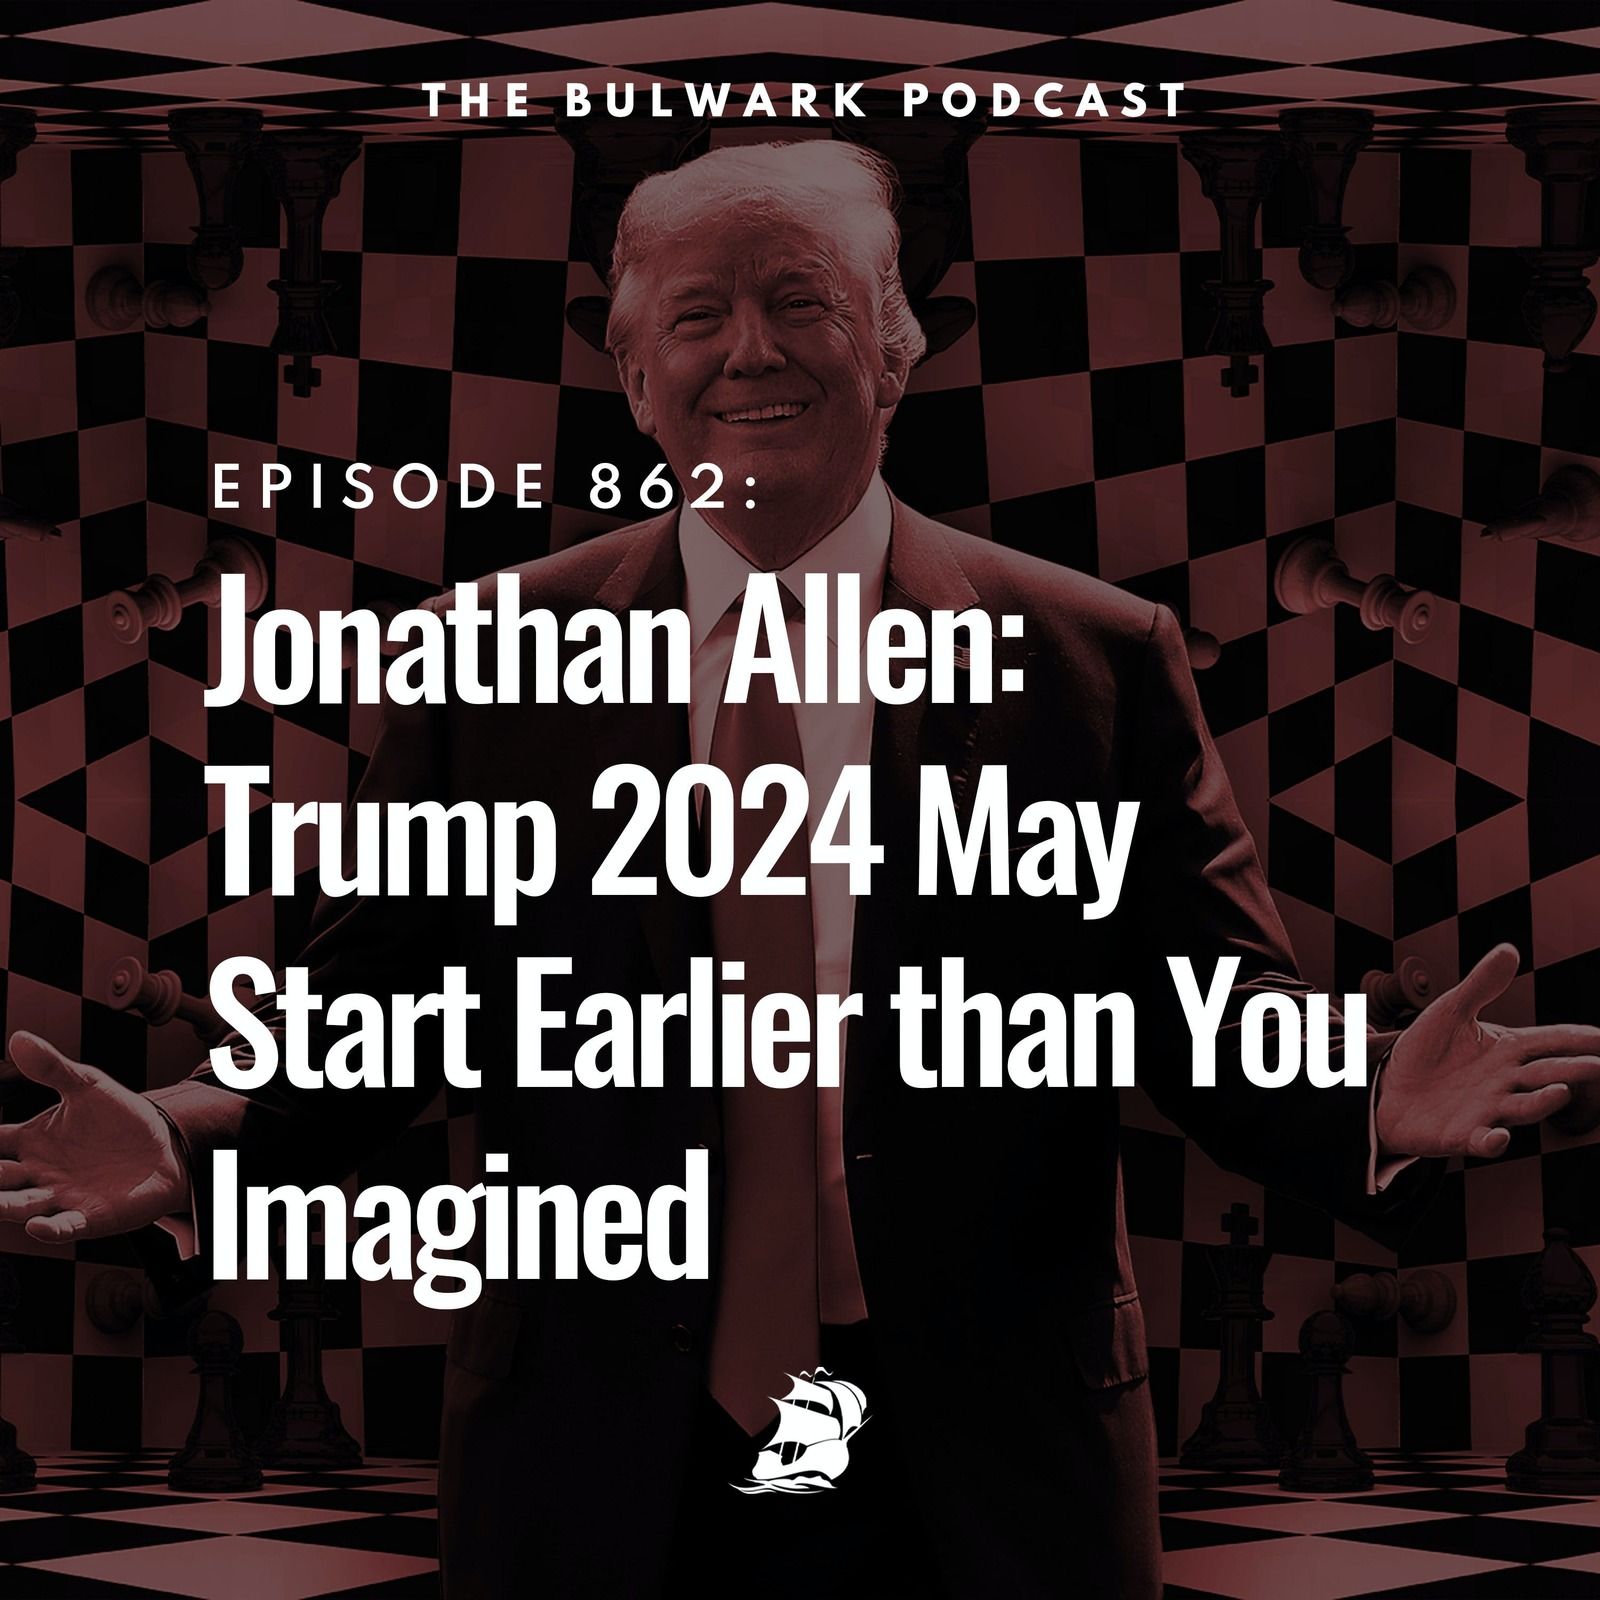 Jonathan Allen: Trump 2024 May Start Earlier than You Imagined